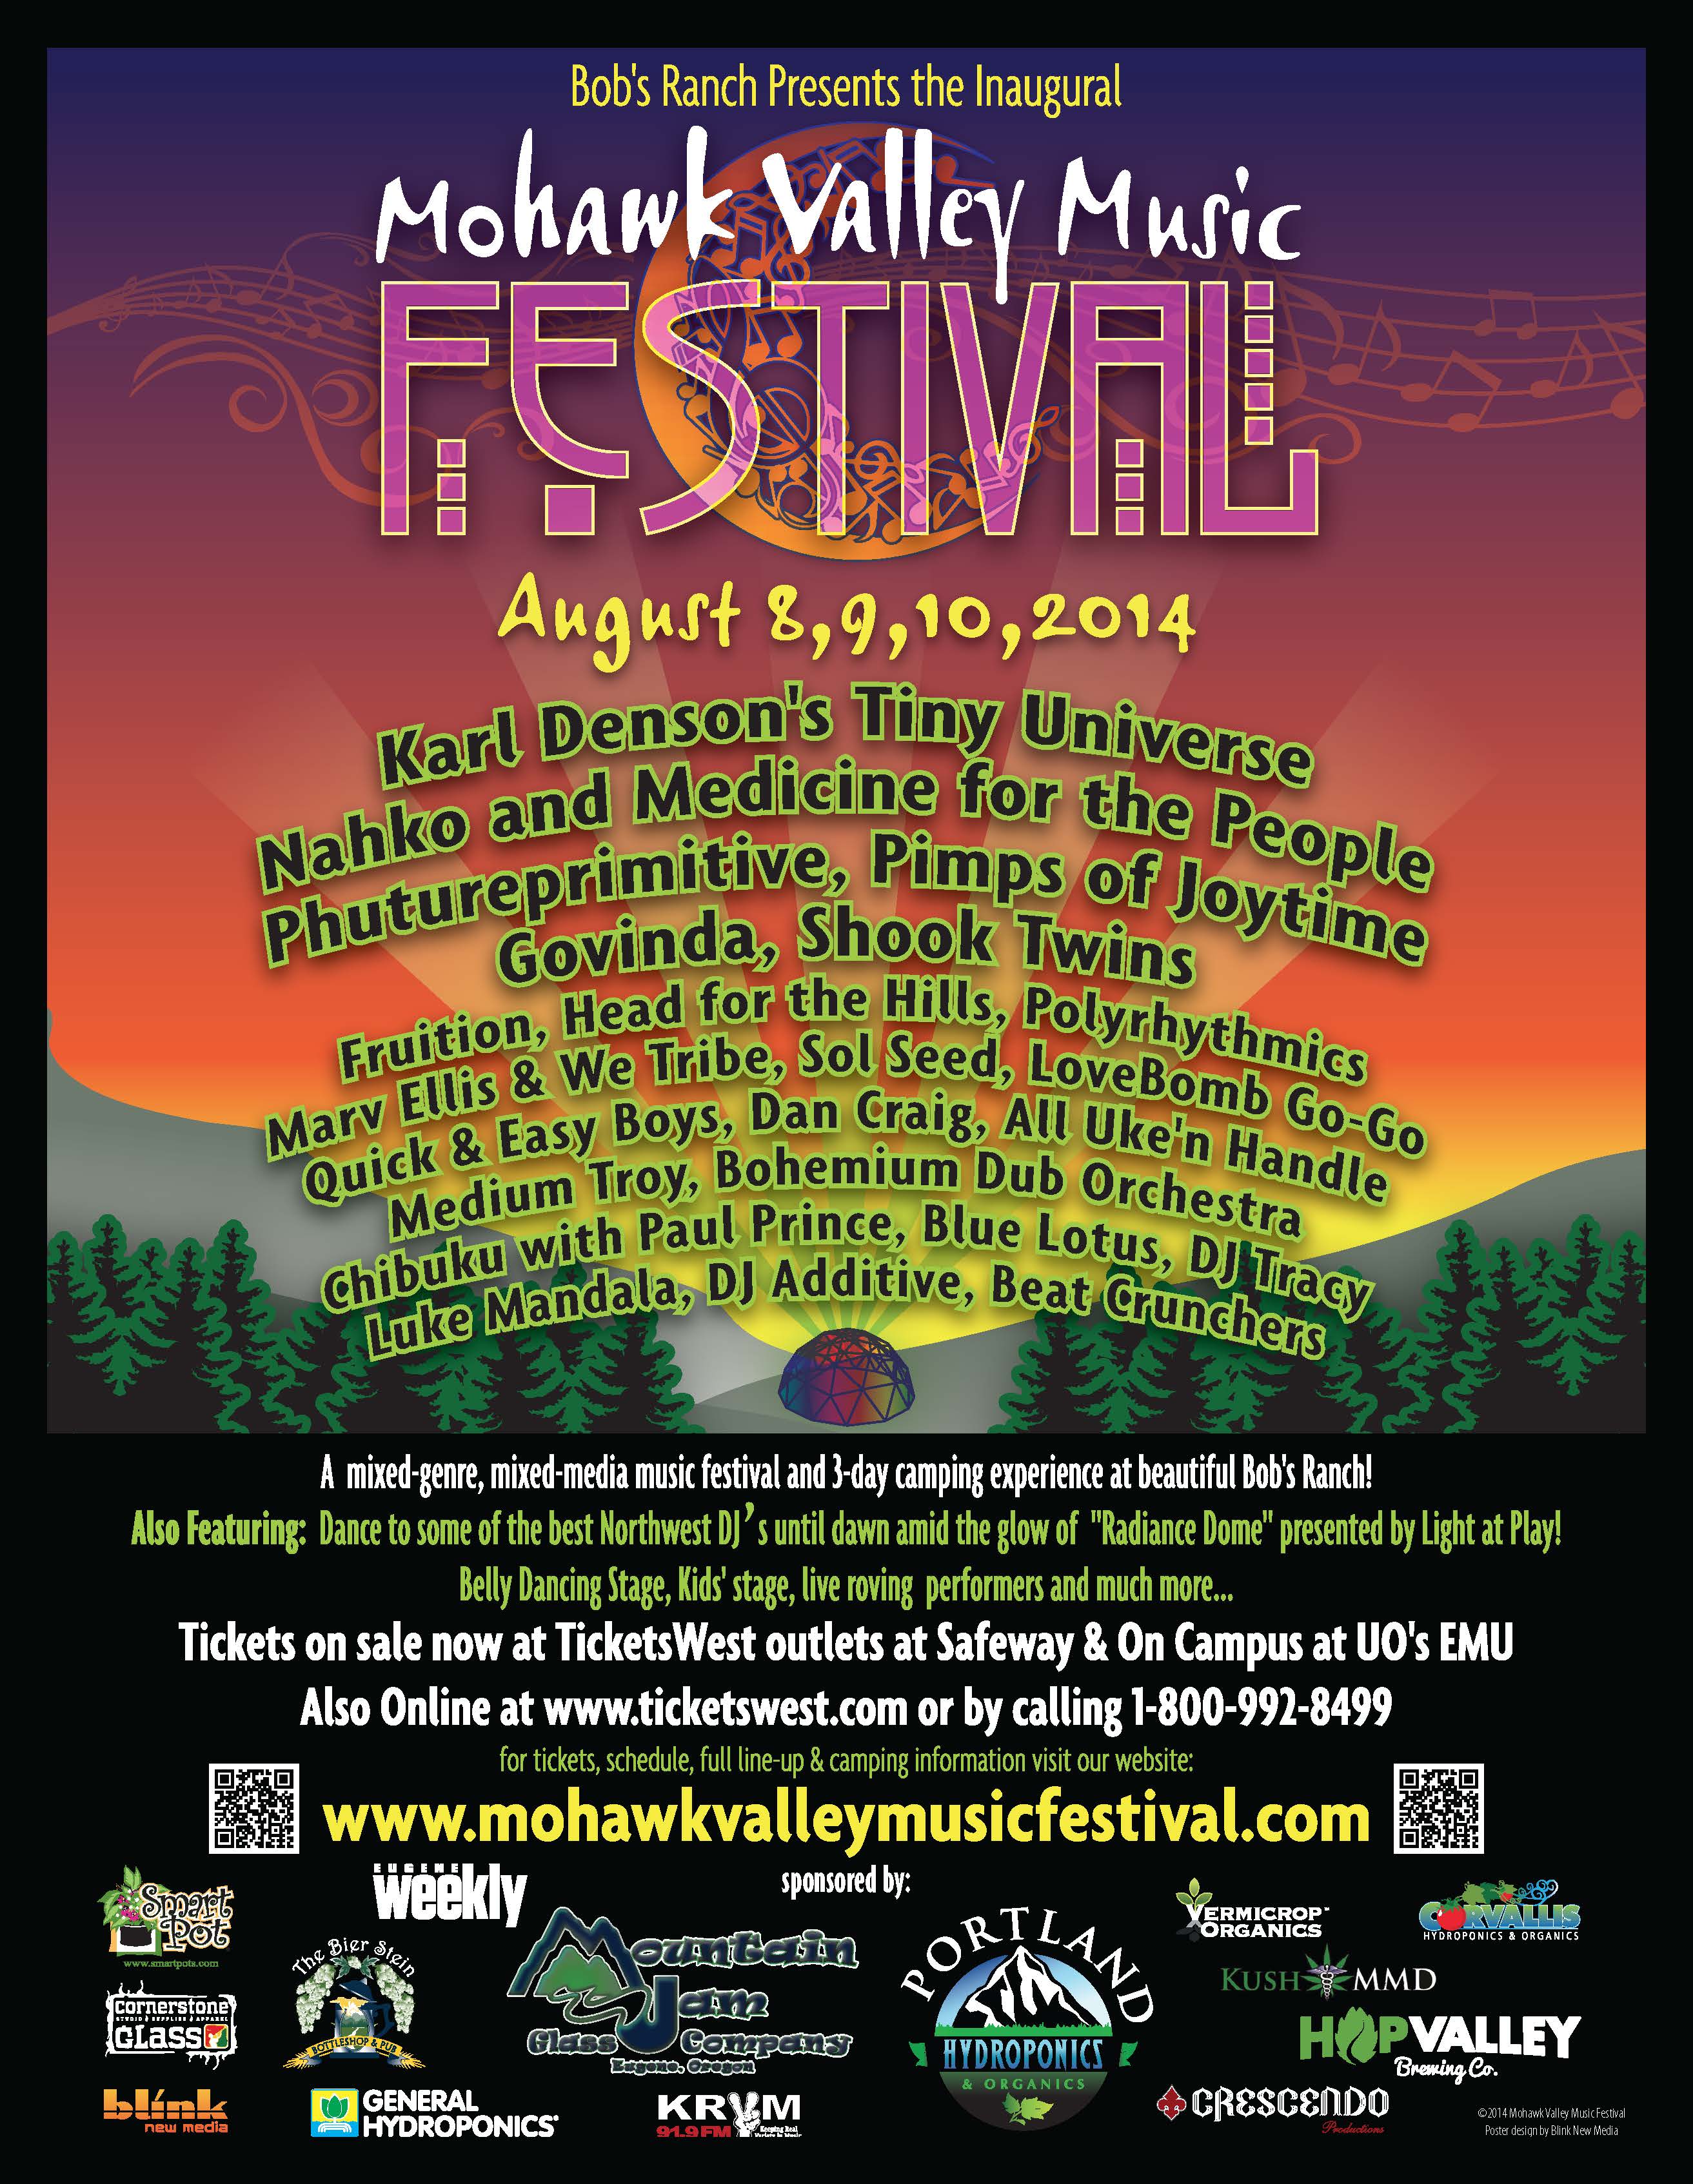 Karl Denson's Tiny Universe Live at Mohawk Valley Music Festival 